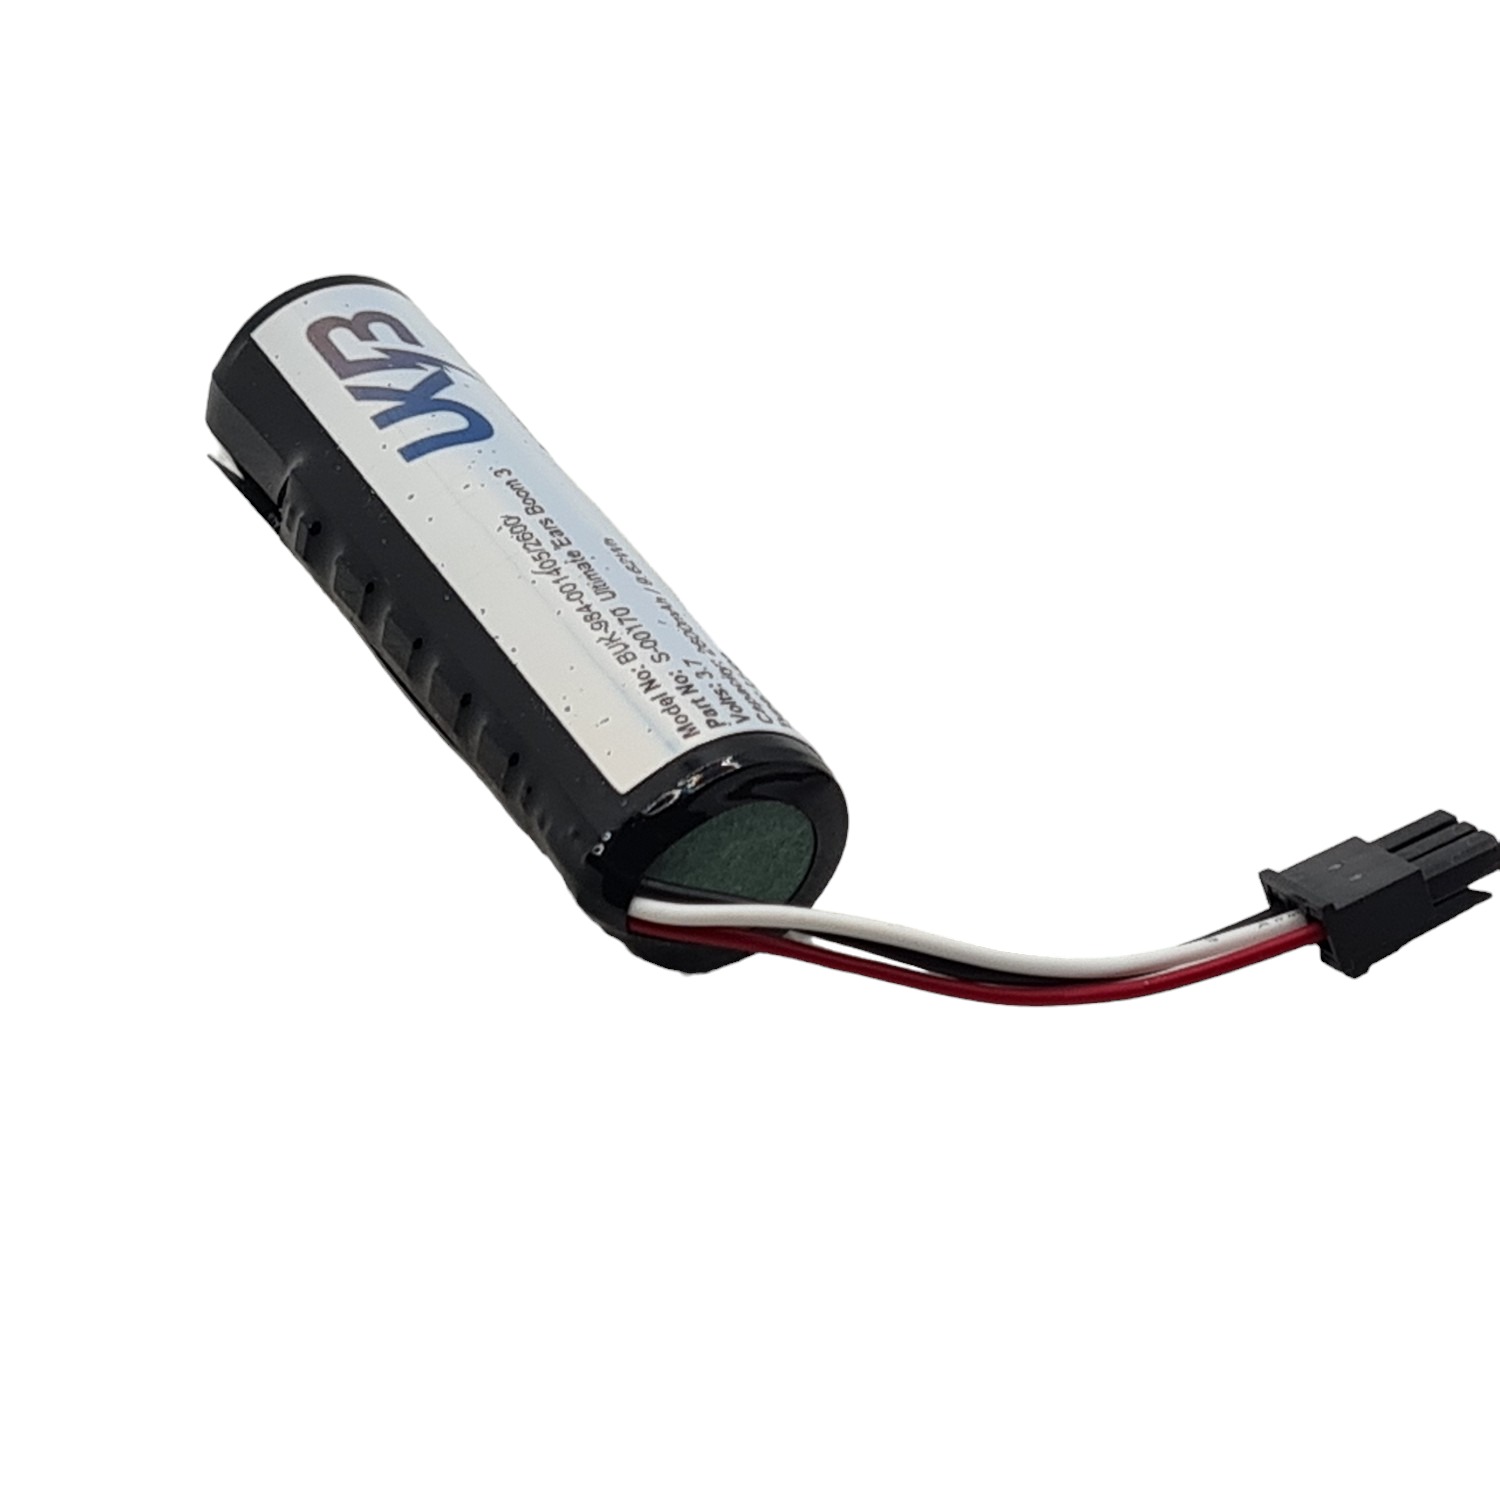 Logitech 984-001405 Compatible Replacement Battery